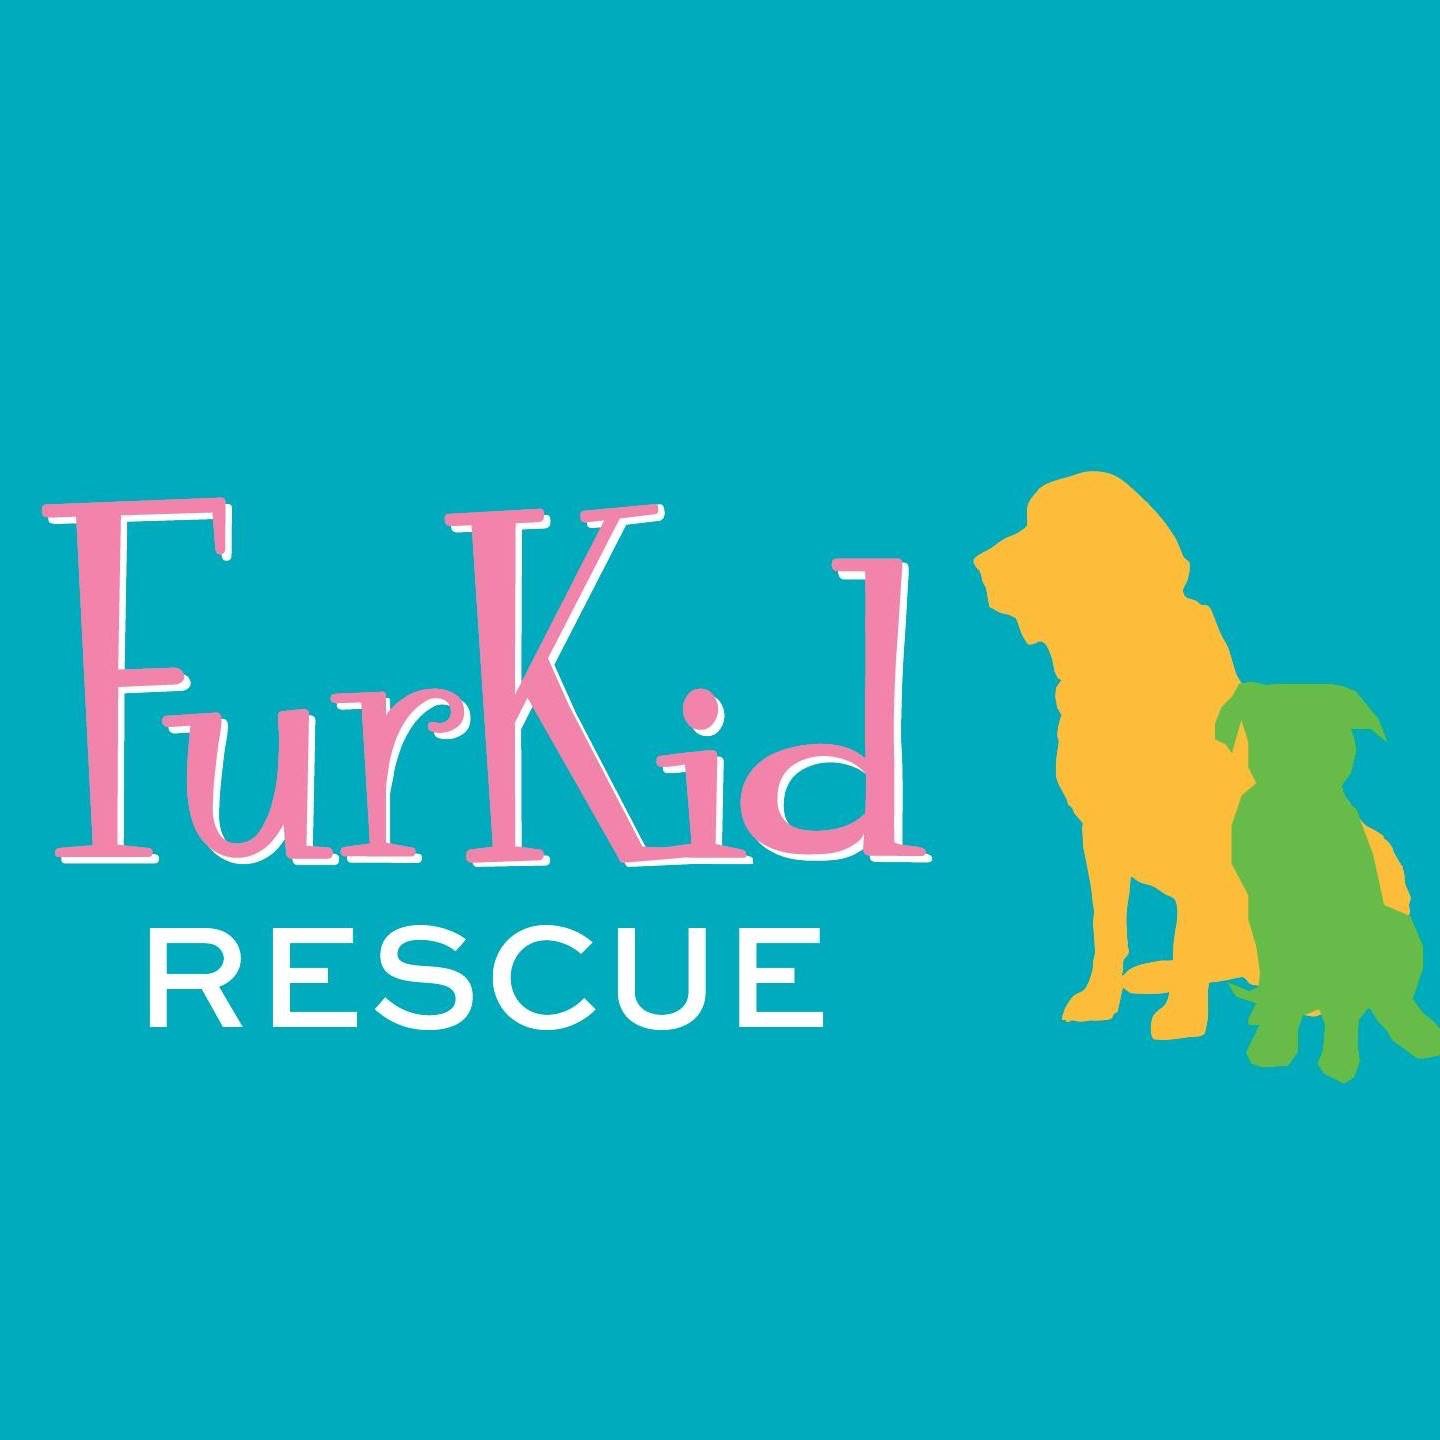 FurKid Rescue